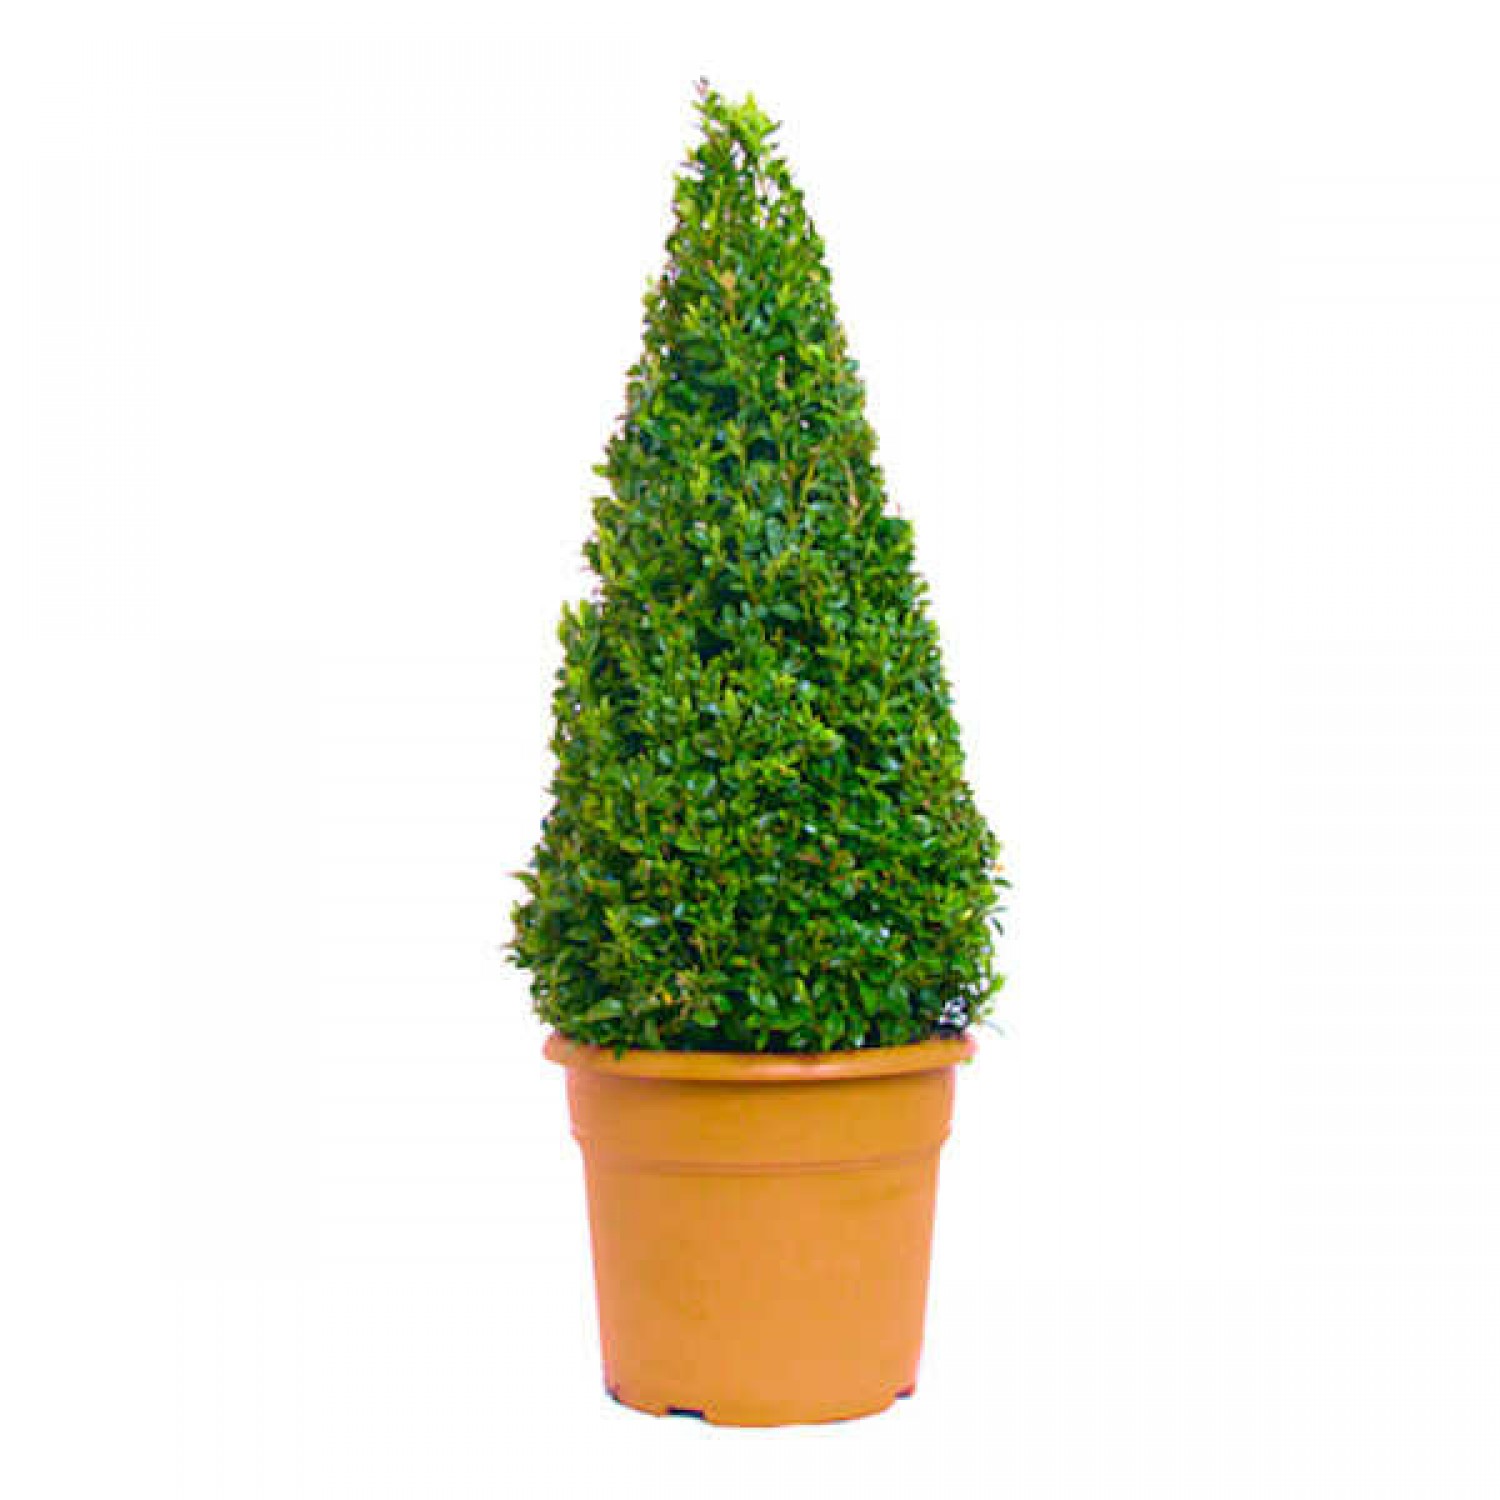 Box Topiary Cone (Buxus spp.) Shrubs